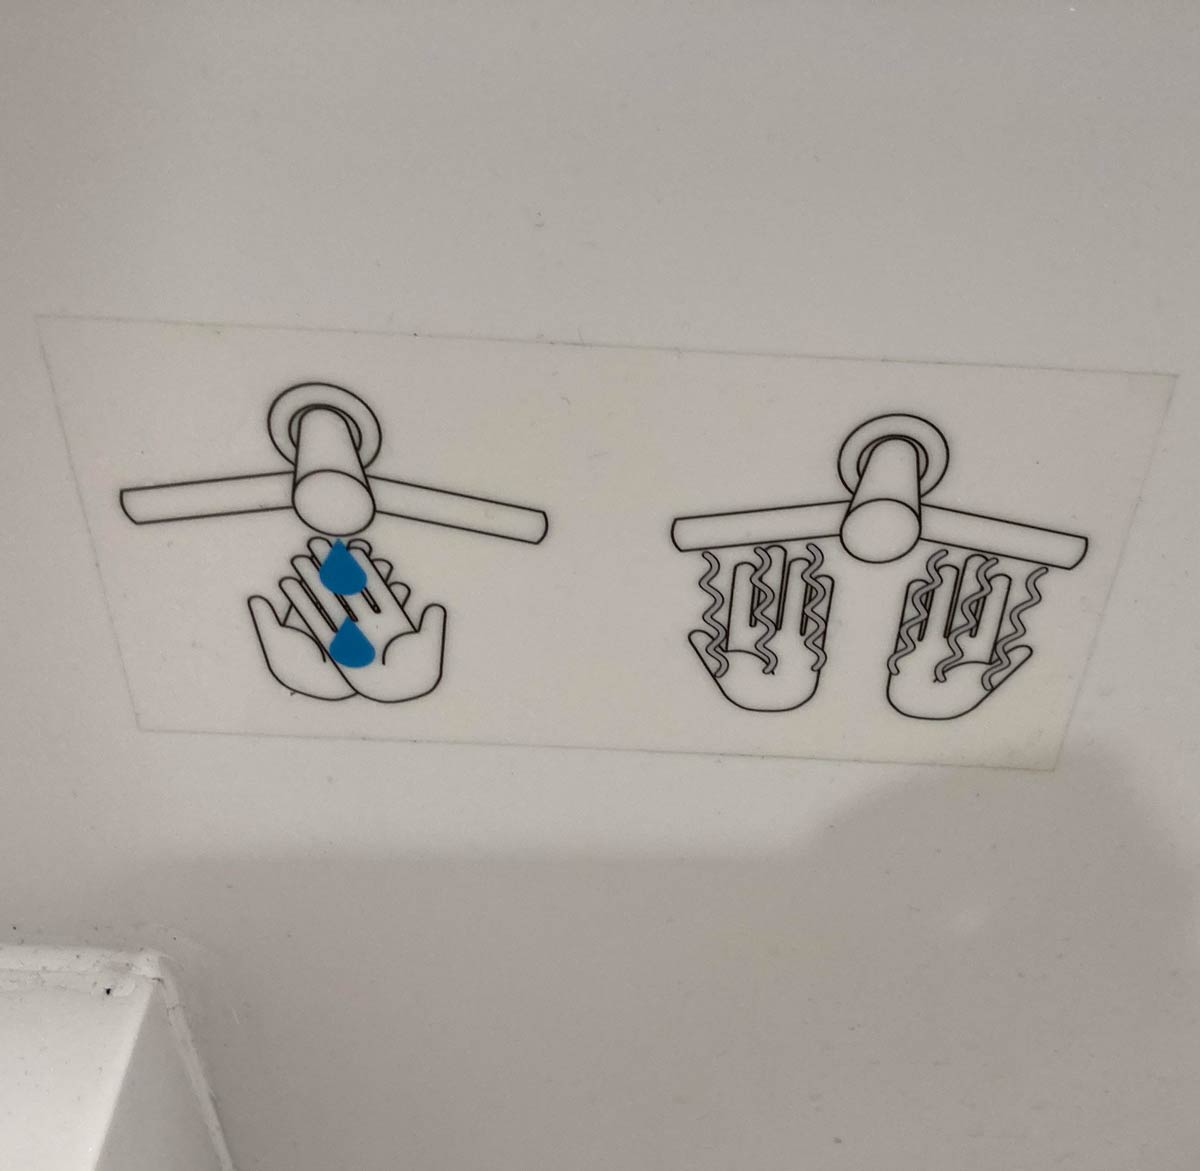 Wash hands, receive spaghetti